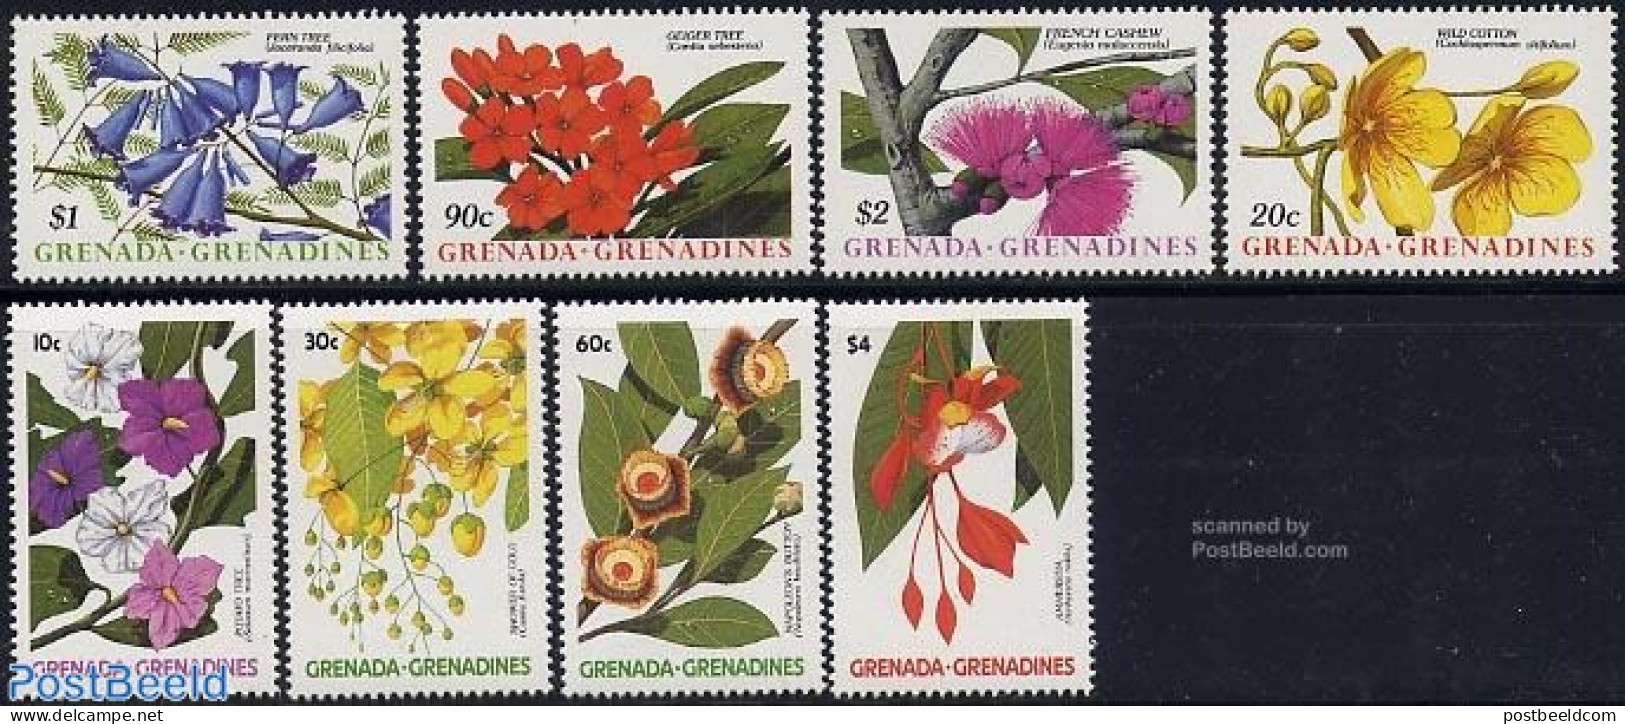 Grenada Grenadines 1988 Flowers 8v, Mint NH, Nature - Flowers & Plants - Grenada (1974-...)